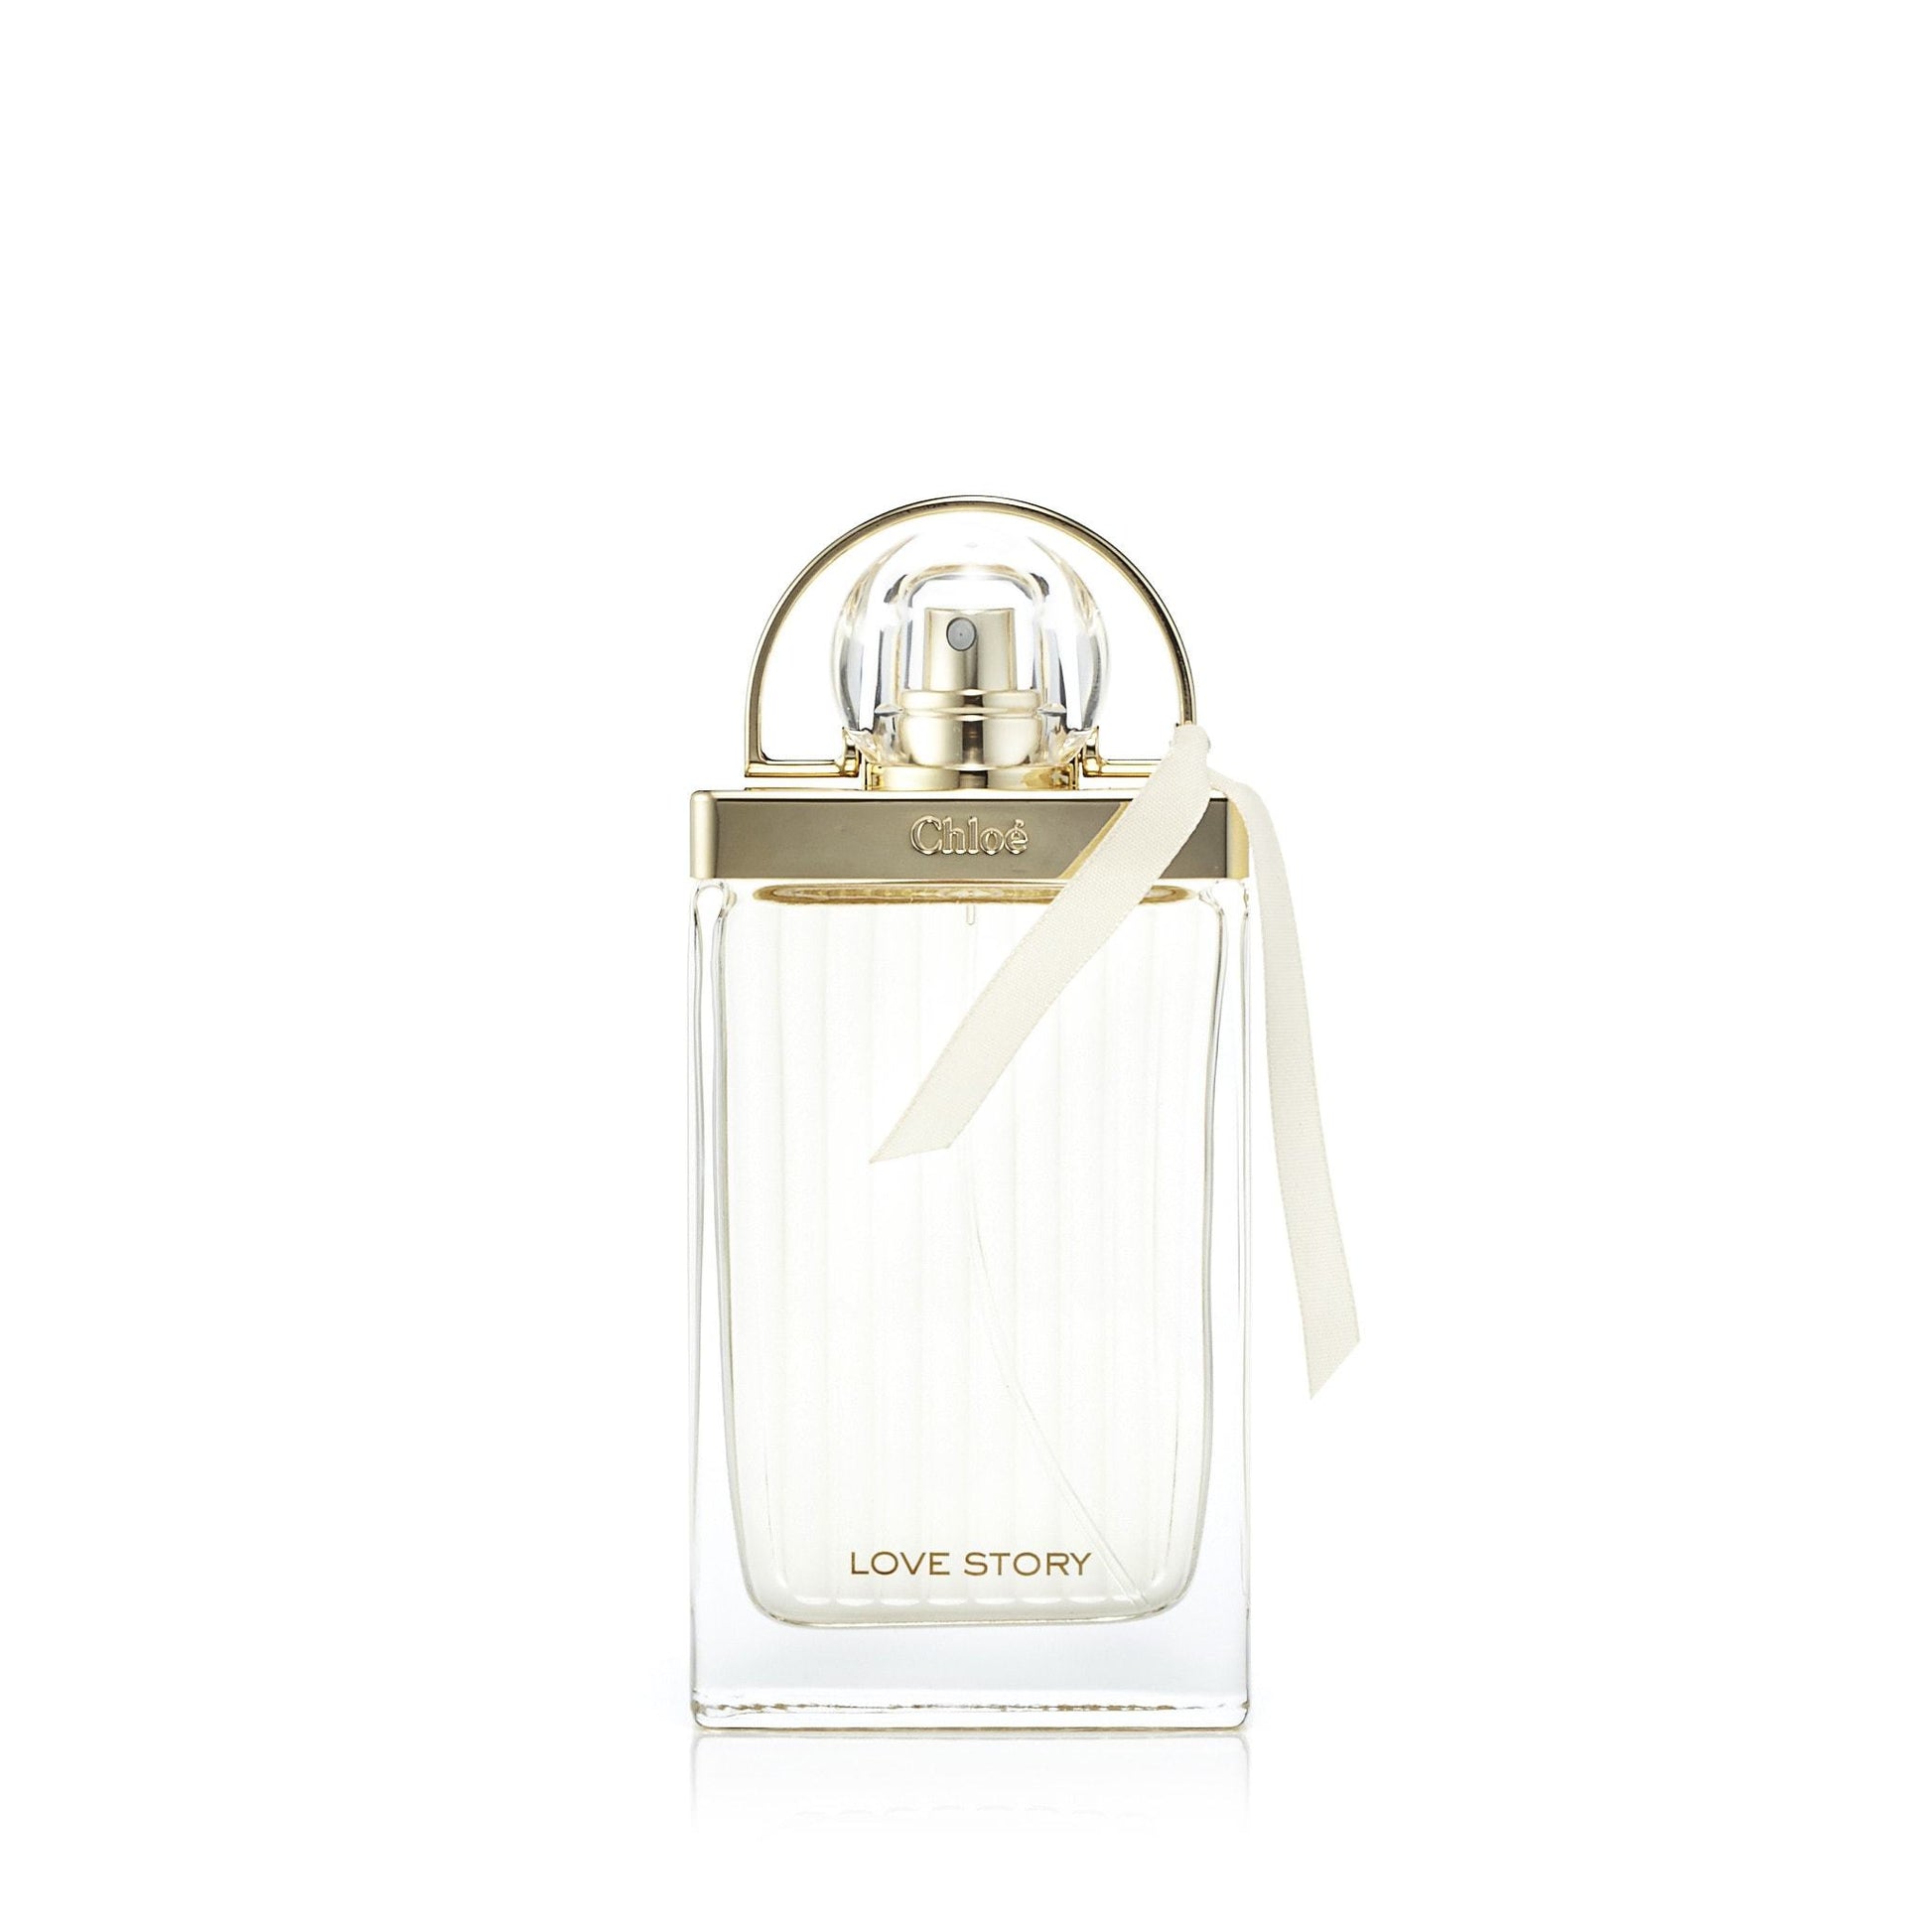 Love Story Eau de Parfum Spray for Women by Chloe, Product image 1